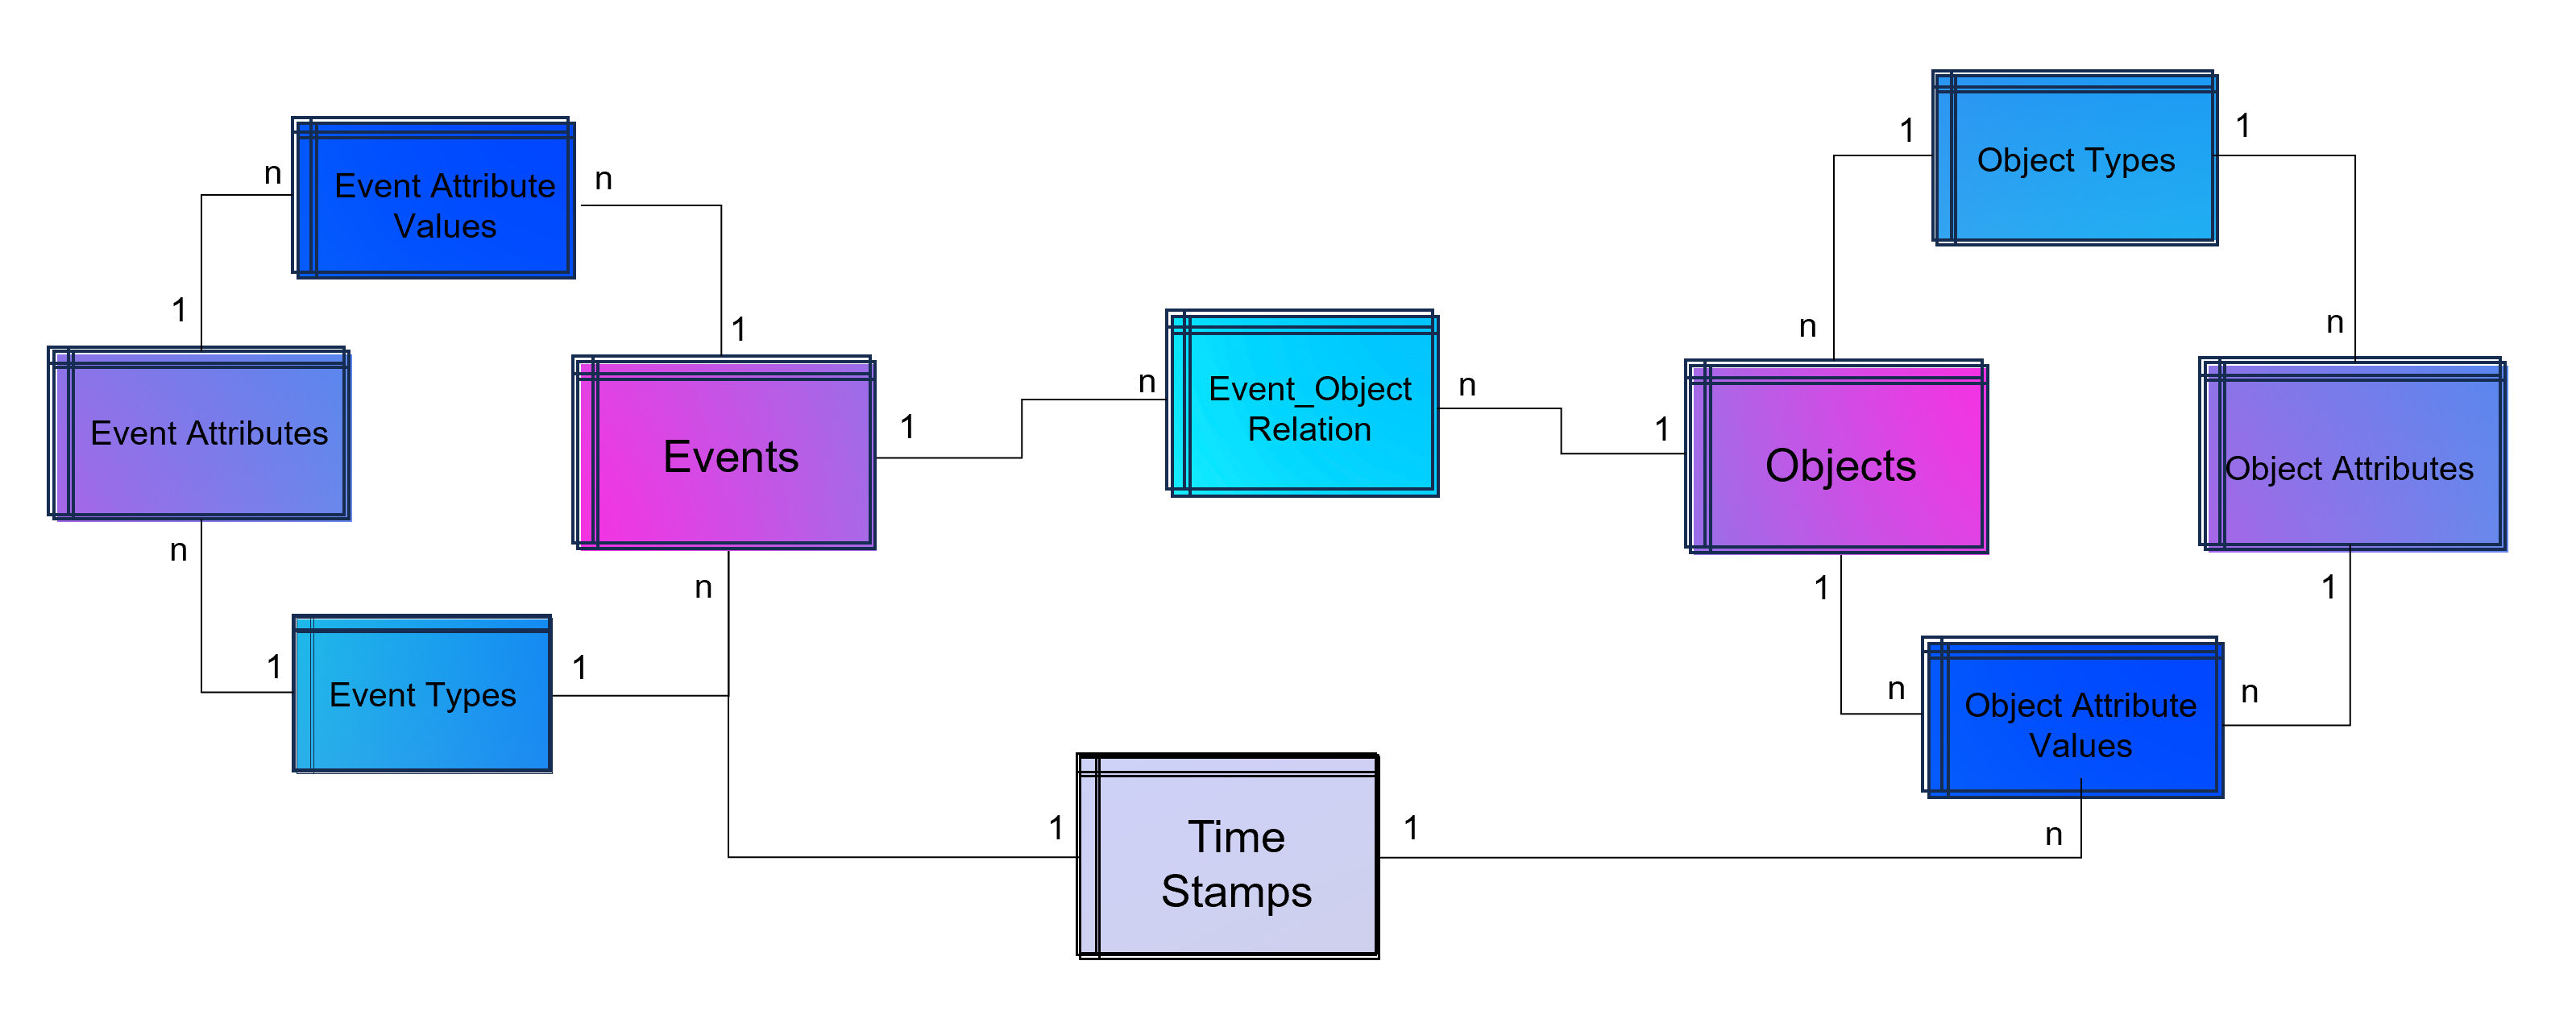 Object-centric Event Log Data Model